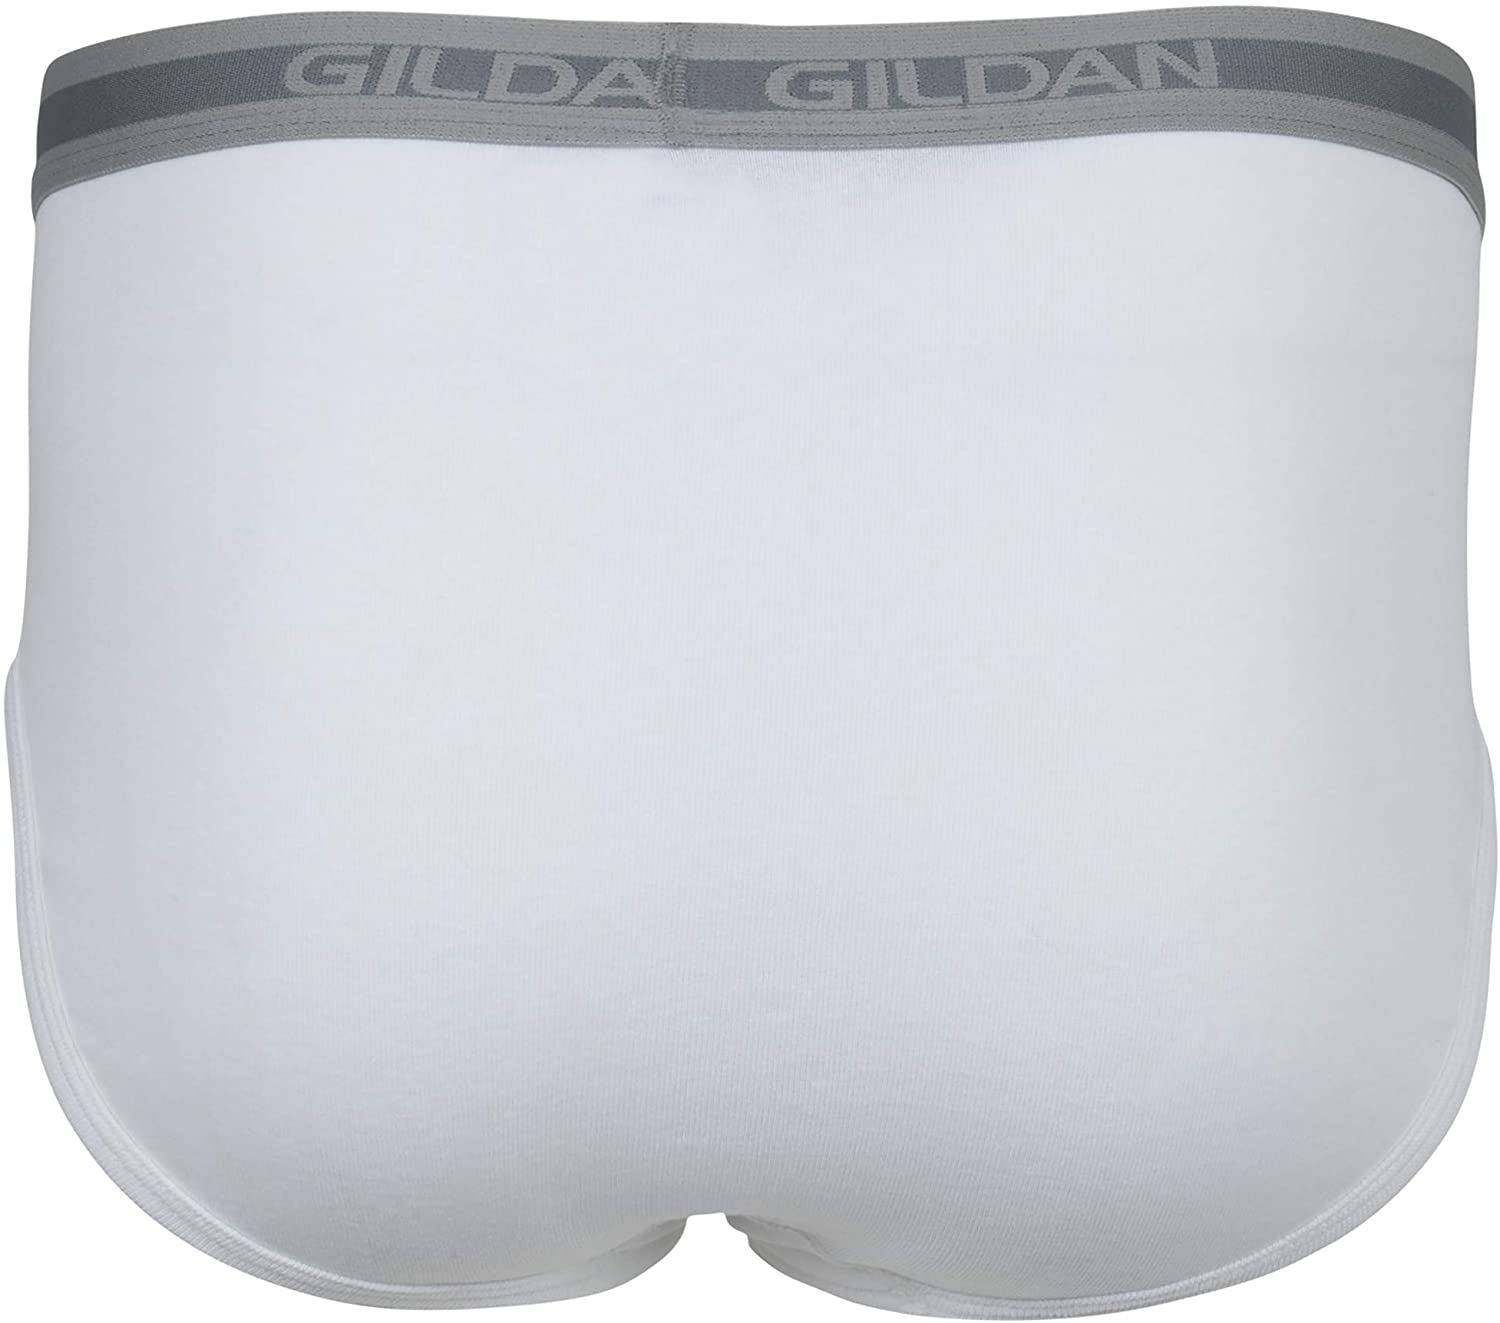 Gildan Mens Brief 6 Pack Underwear Grey Black Medium White Size Small Wtqw Ebay 9019